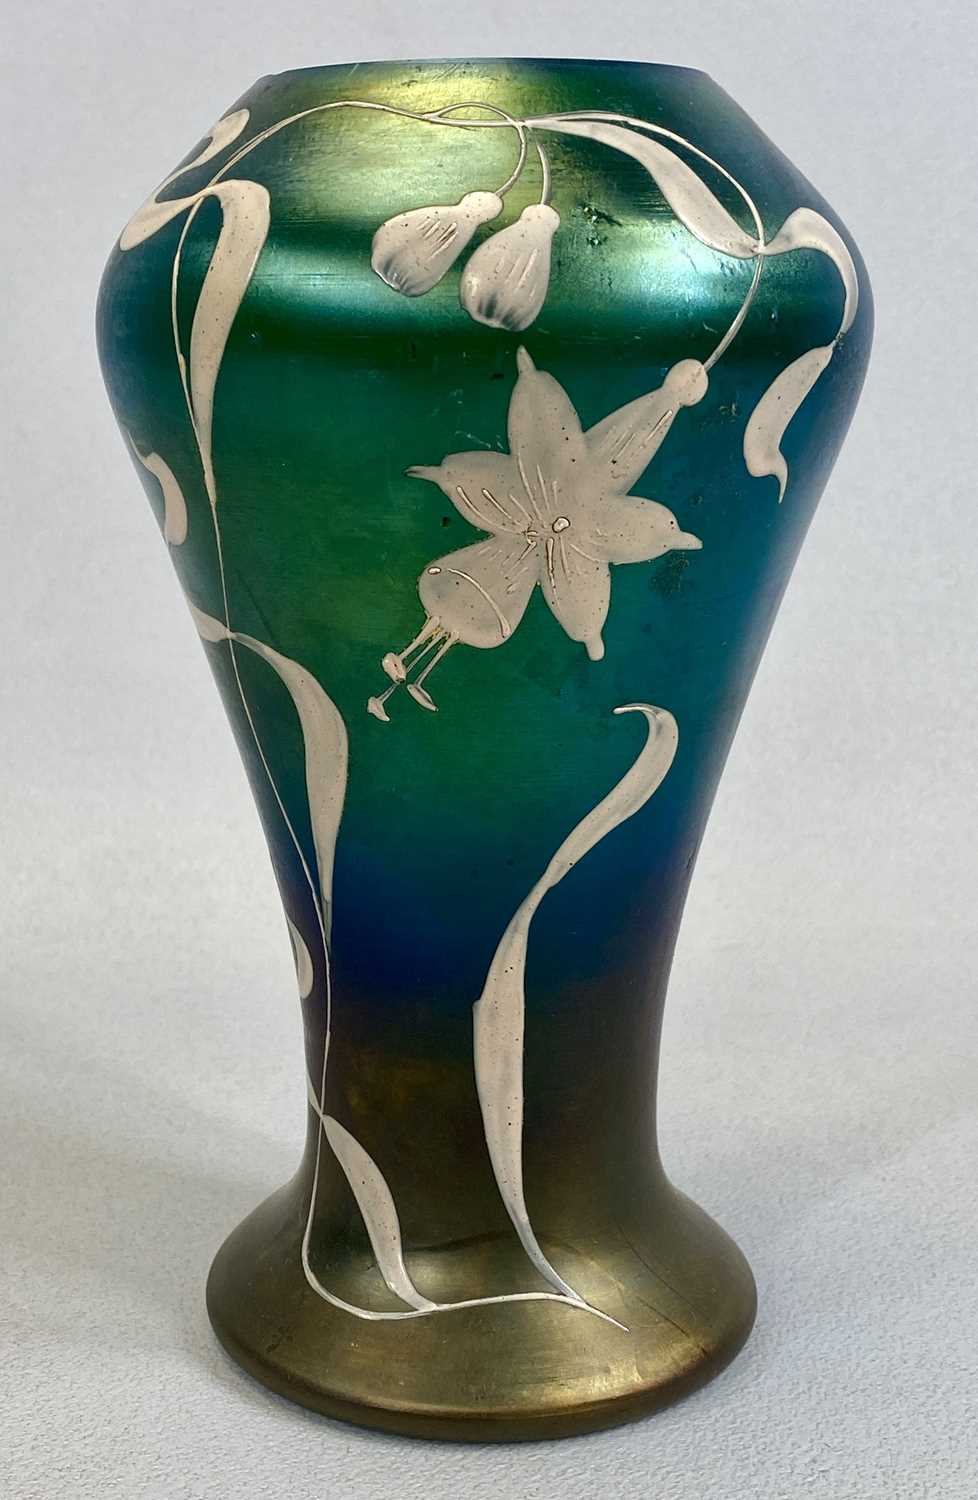 THREE ITEMS OF DECORATIVE GLASSWARE comprising Loetz style art nouveau iridescent vase with enamel - Image 3 of 4